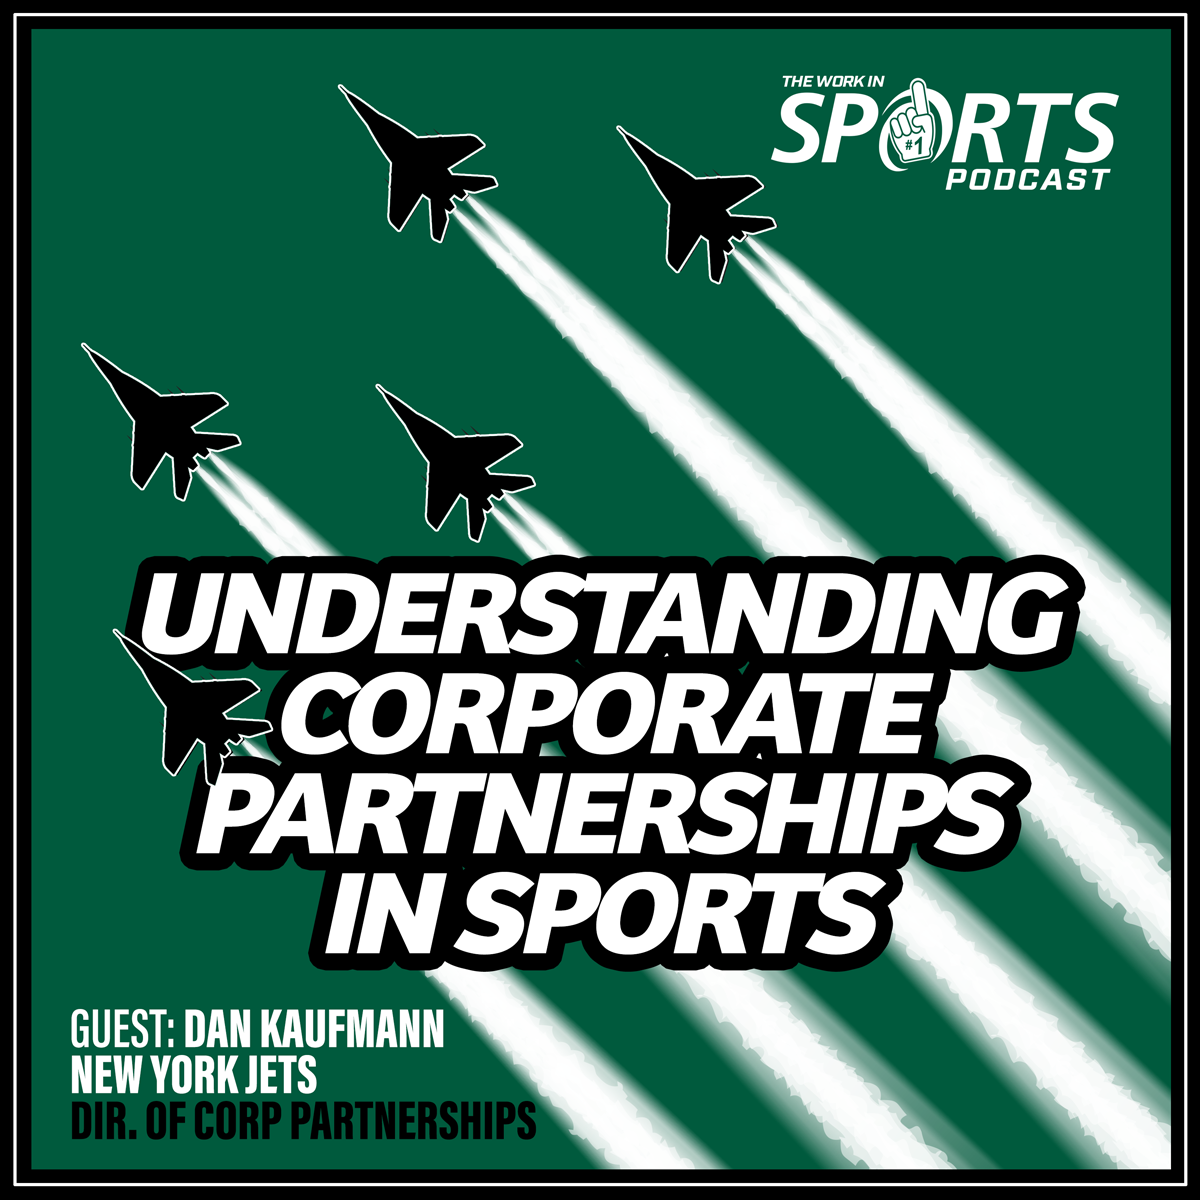 Dan Kaufmann New York Jets corporate partnerships